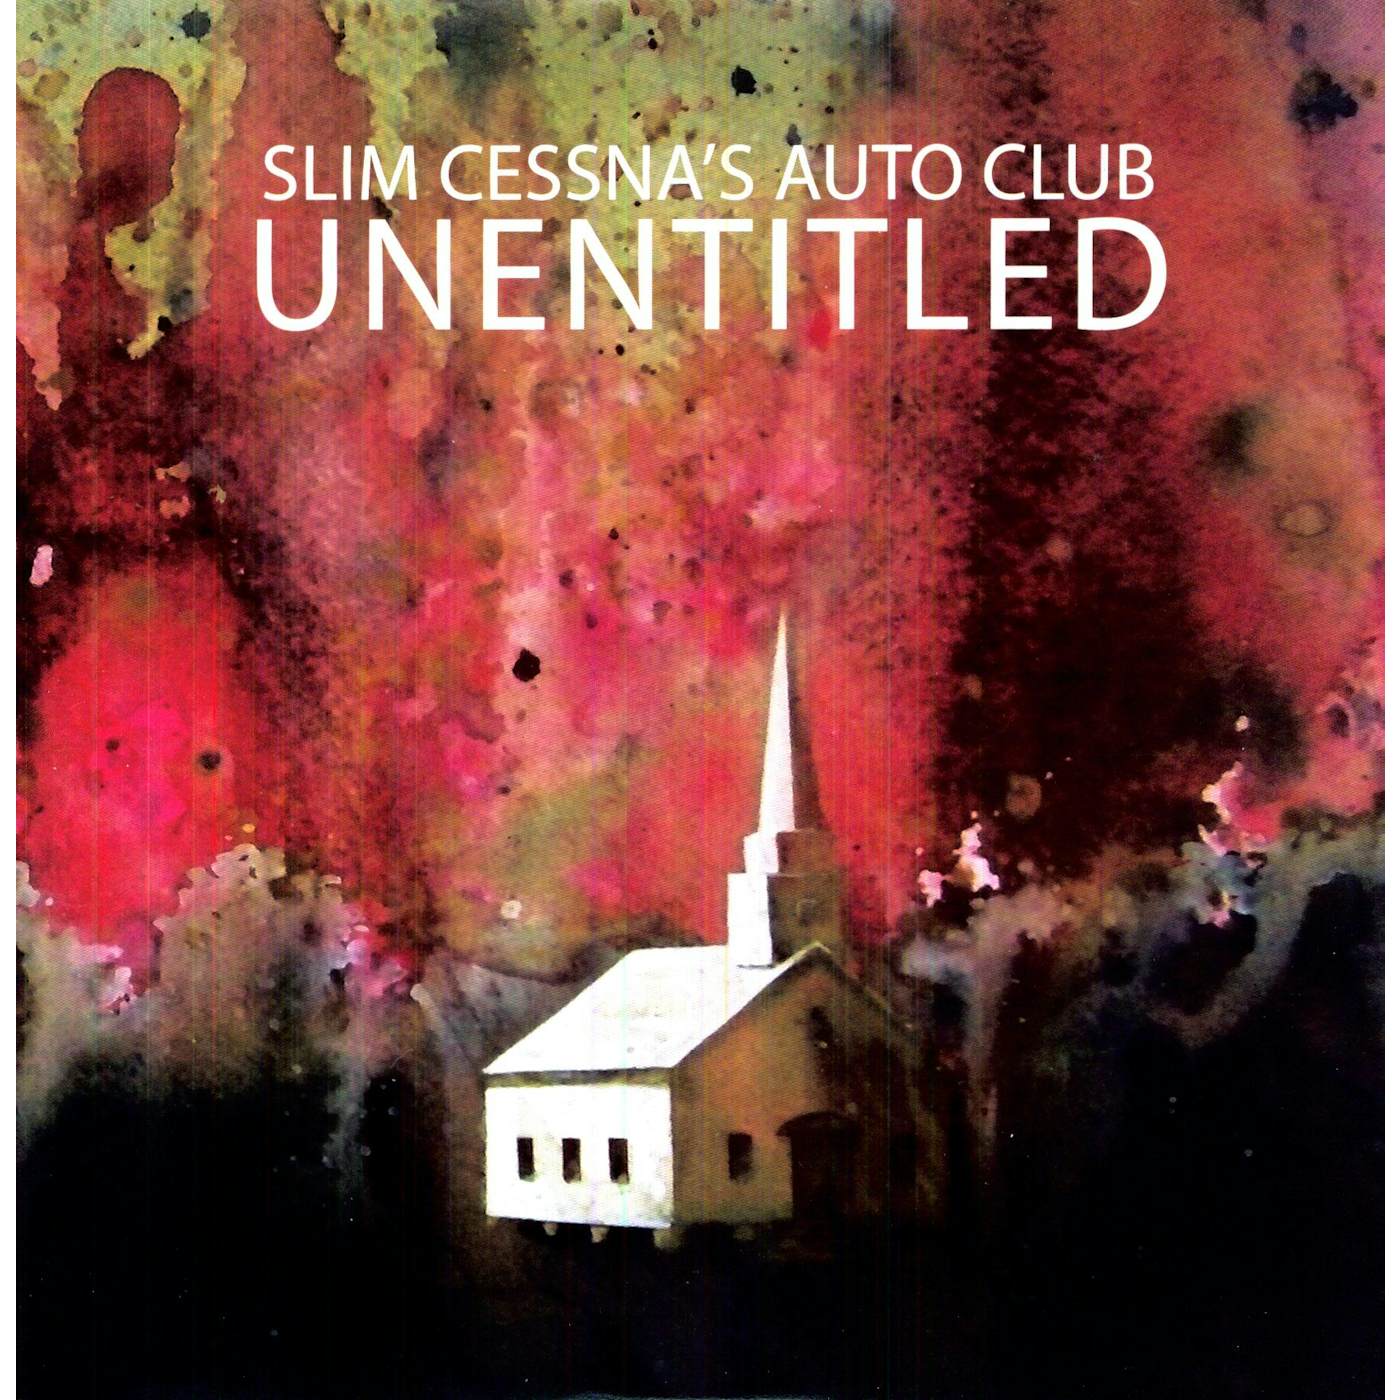 Slim Cessna's Auto Club UNENTITLED Vinyl Record - Digital Download Included